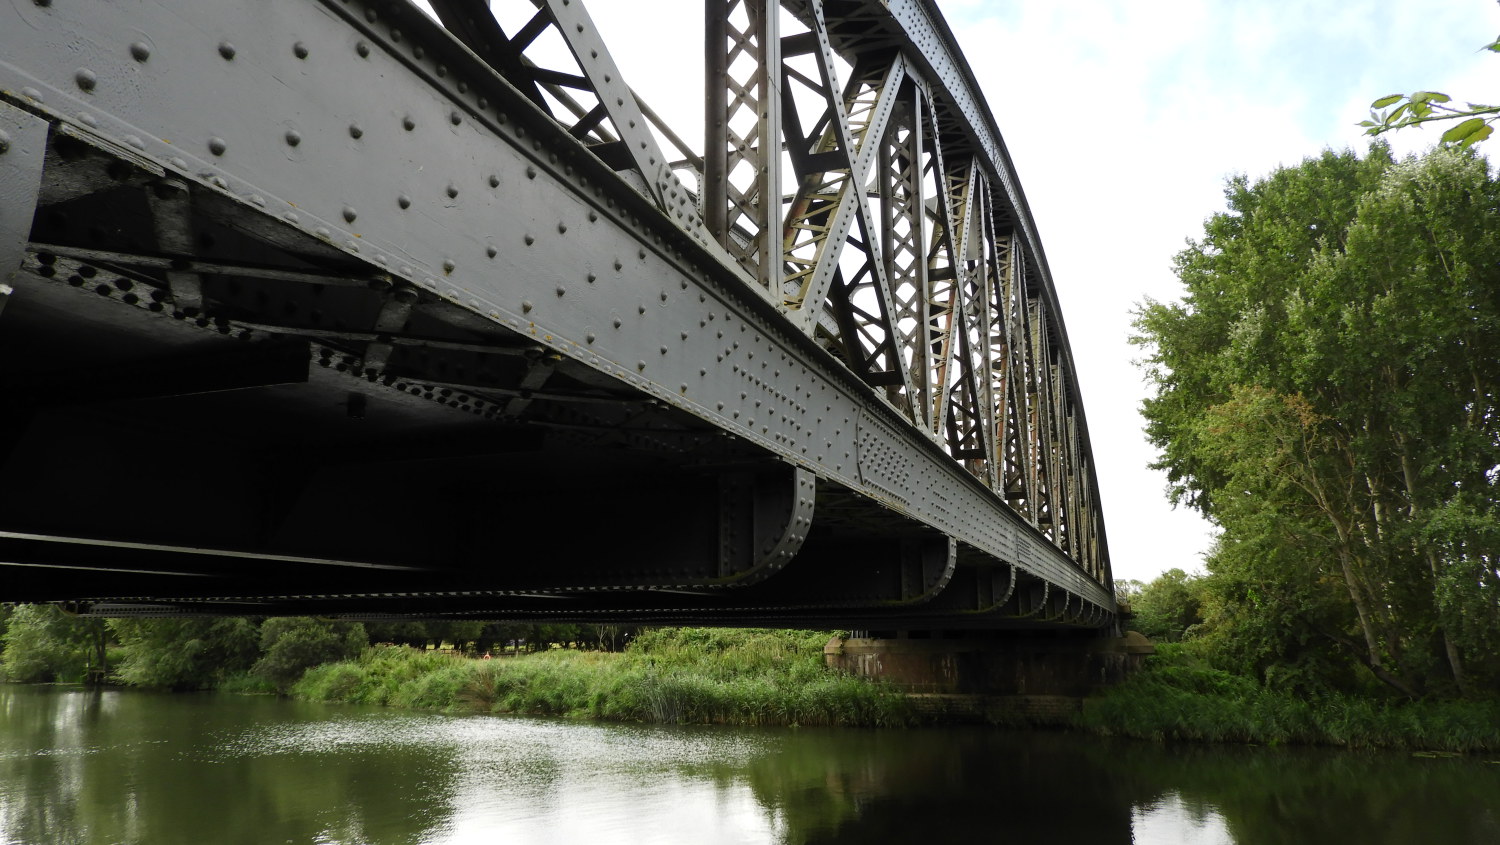 Railway Bridge near Appleford-on-Thames